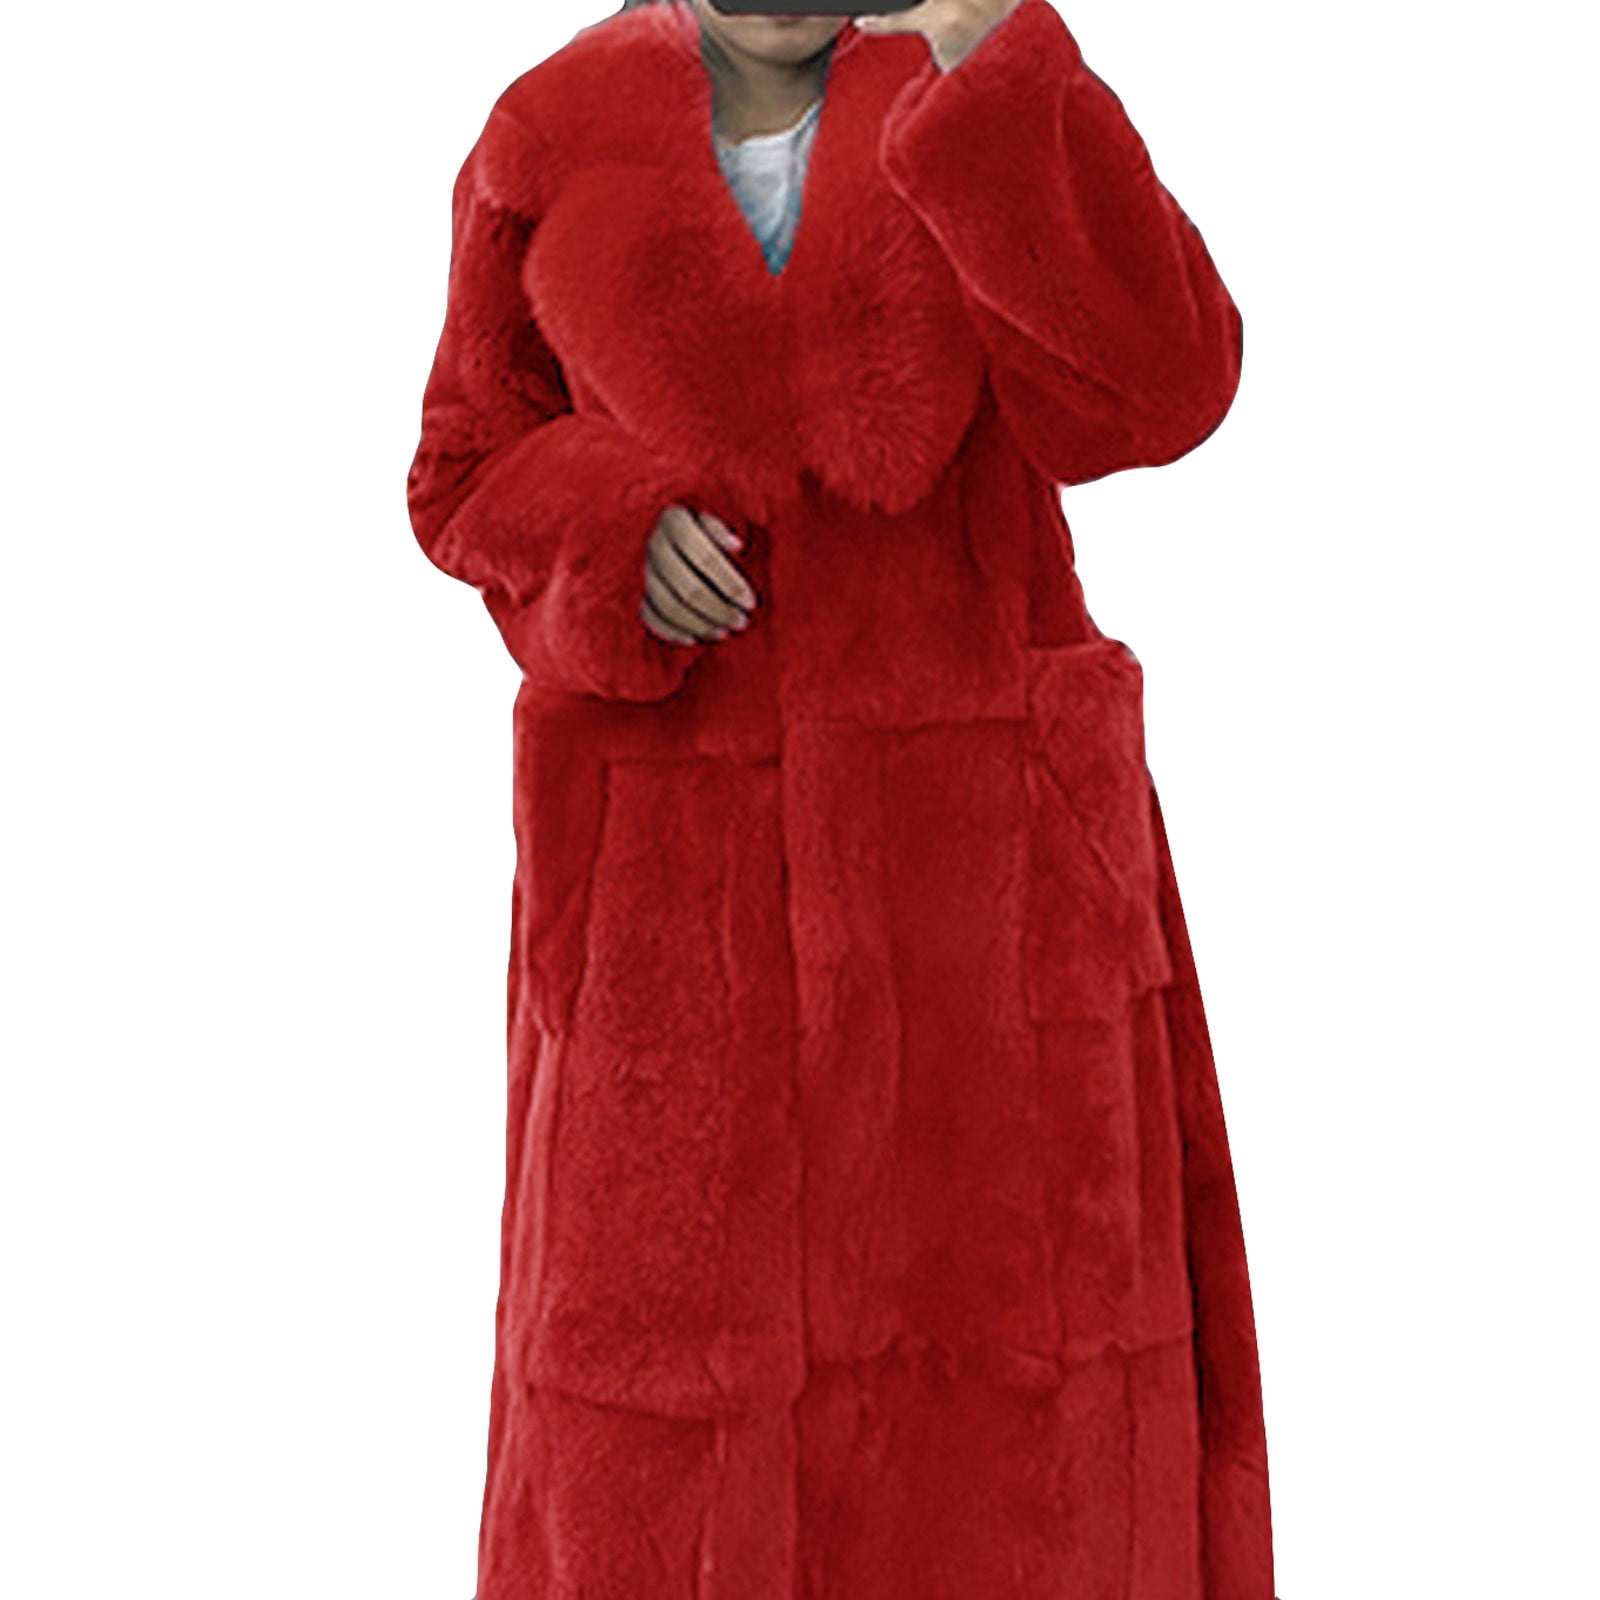 Luxury Women Real Fur Jacket, Fur Coats Real Plus Size